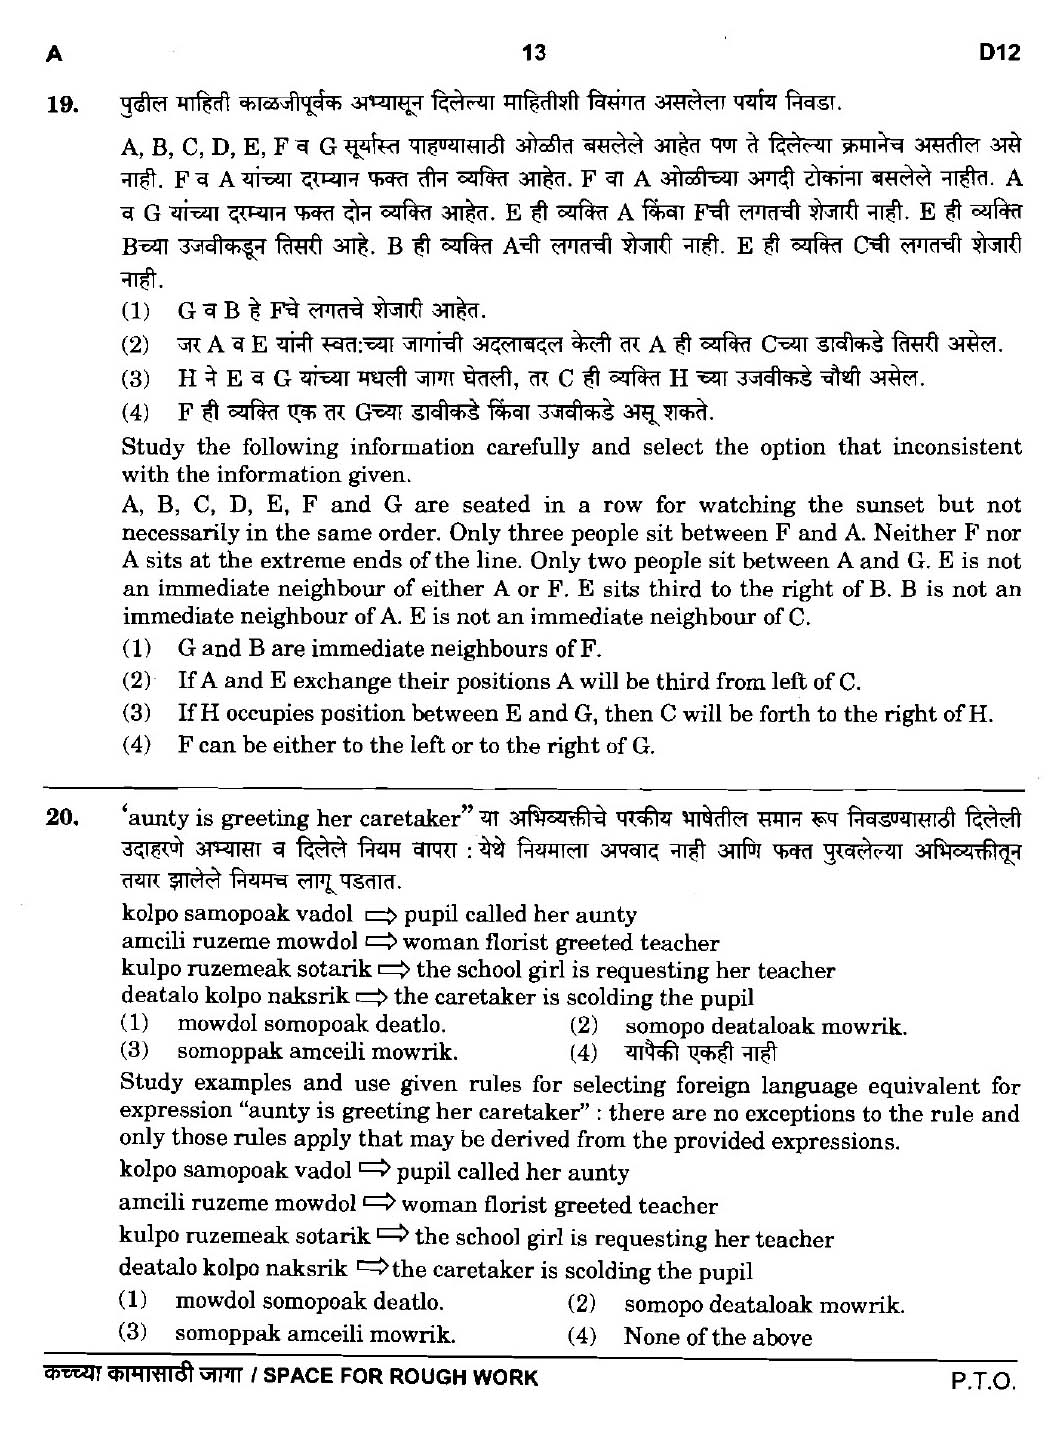 Maharashtra PSC Clerk Typist Main Exam Question Paper 2018 12